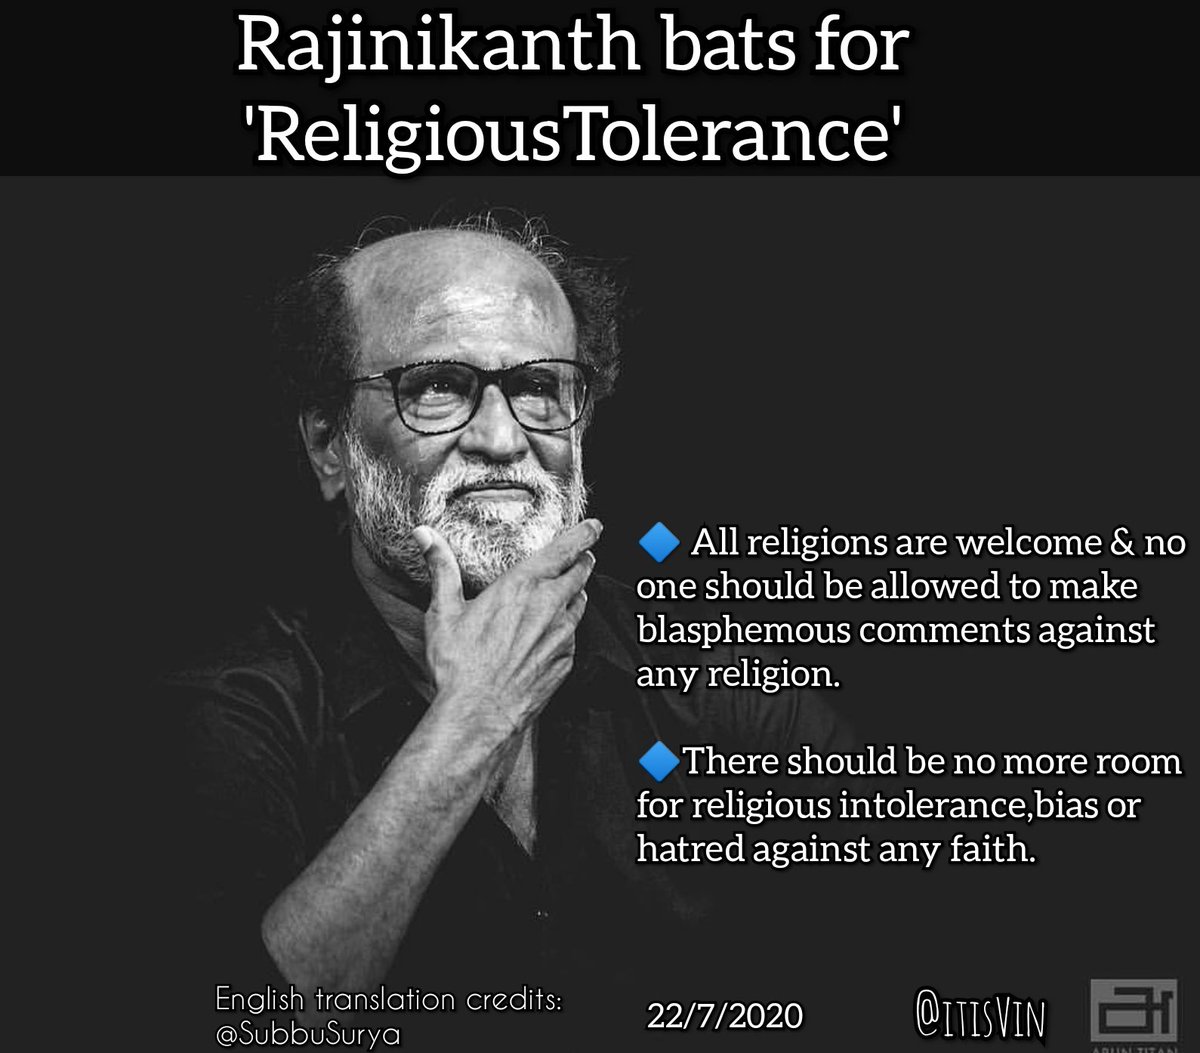 Thalaivar #Rajinikanth bats for 'ReligiousTolerance'

#கந்தனுக்கு_அரோகரா 
#எல்லா_மதமும்_சம்மதமே